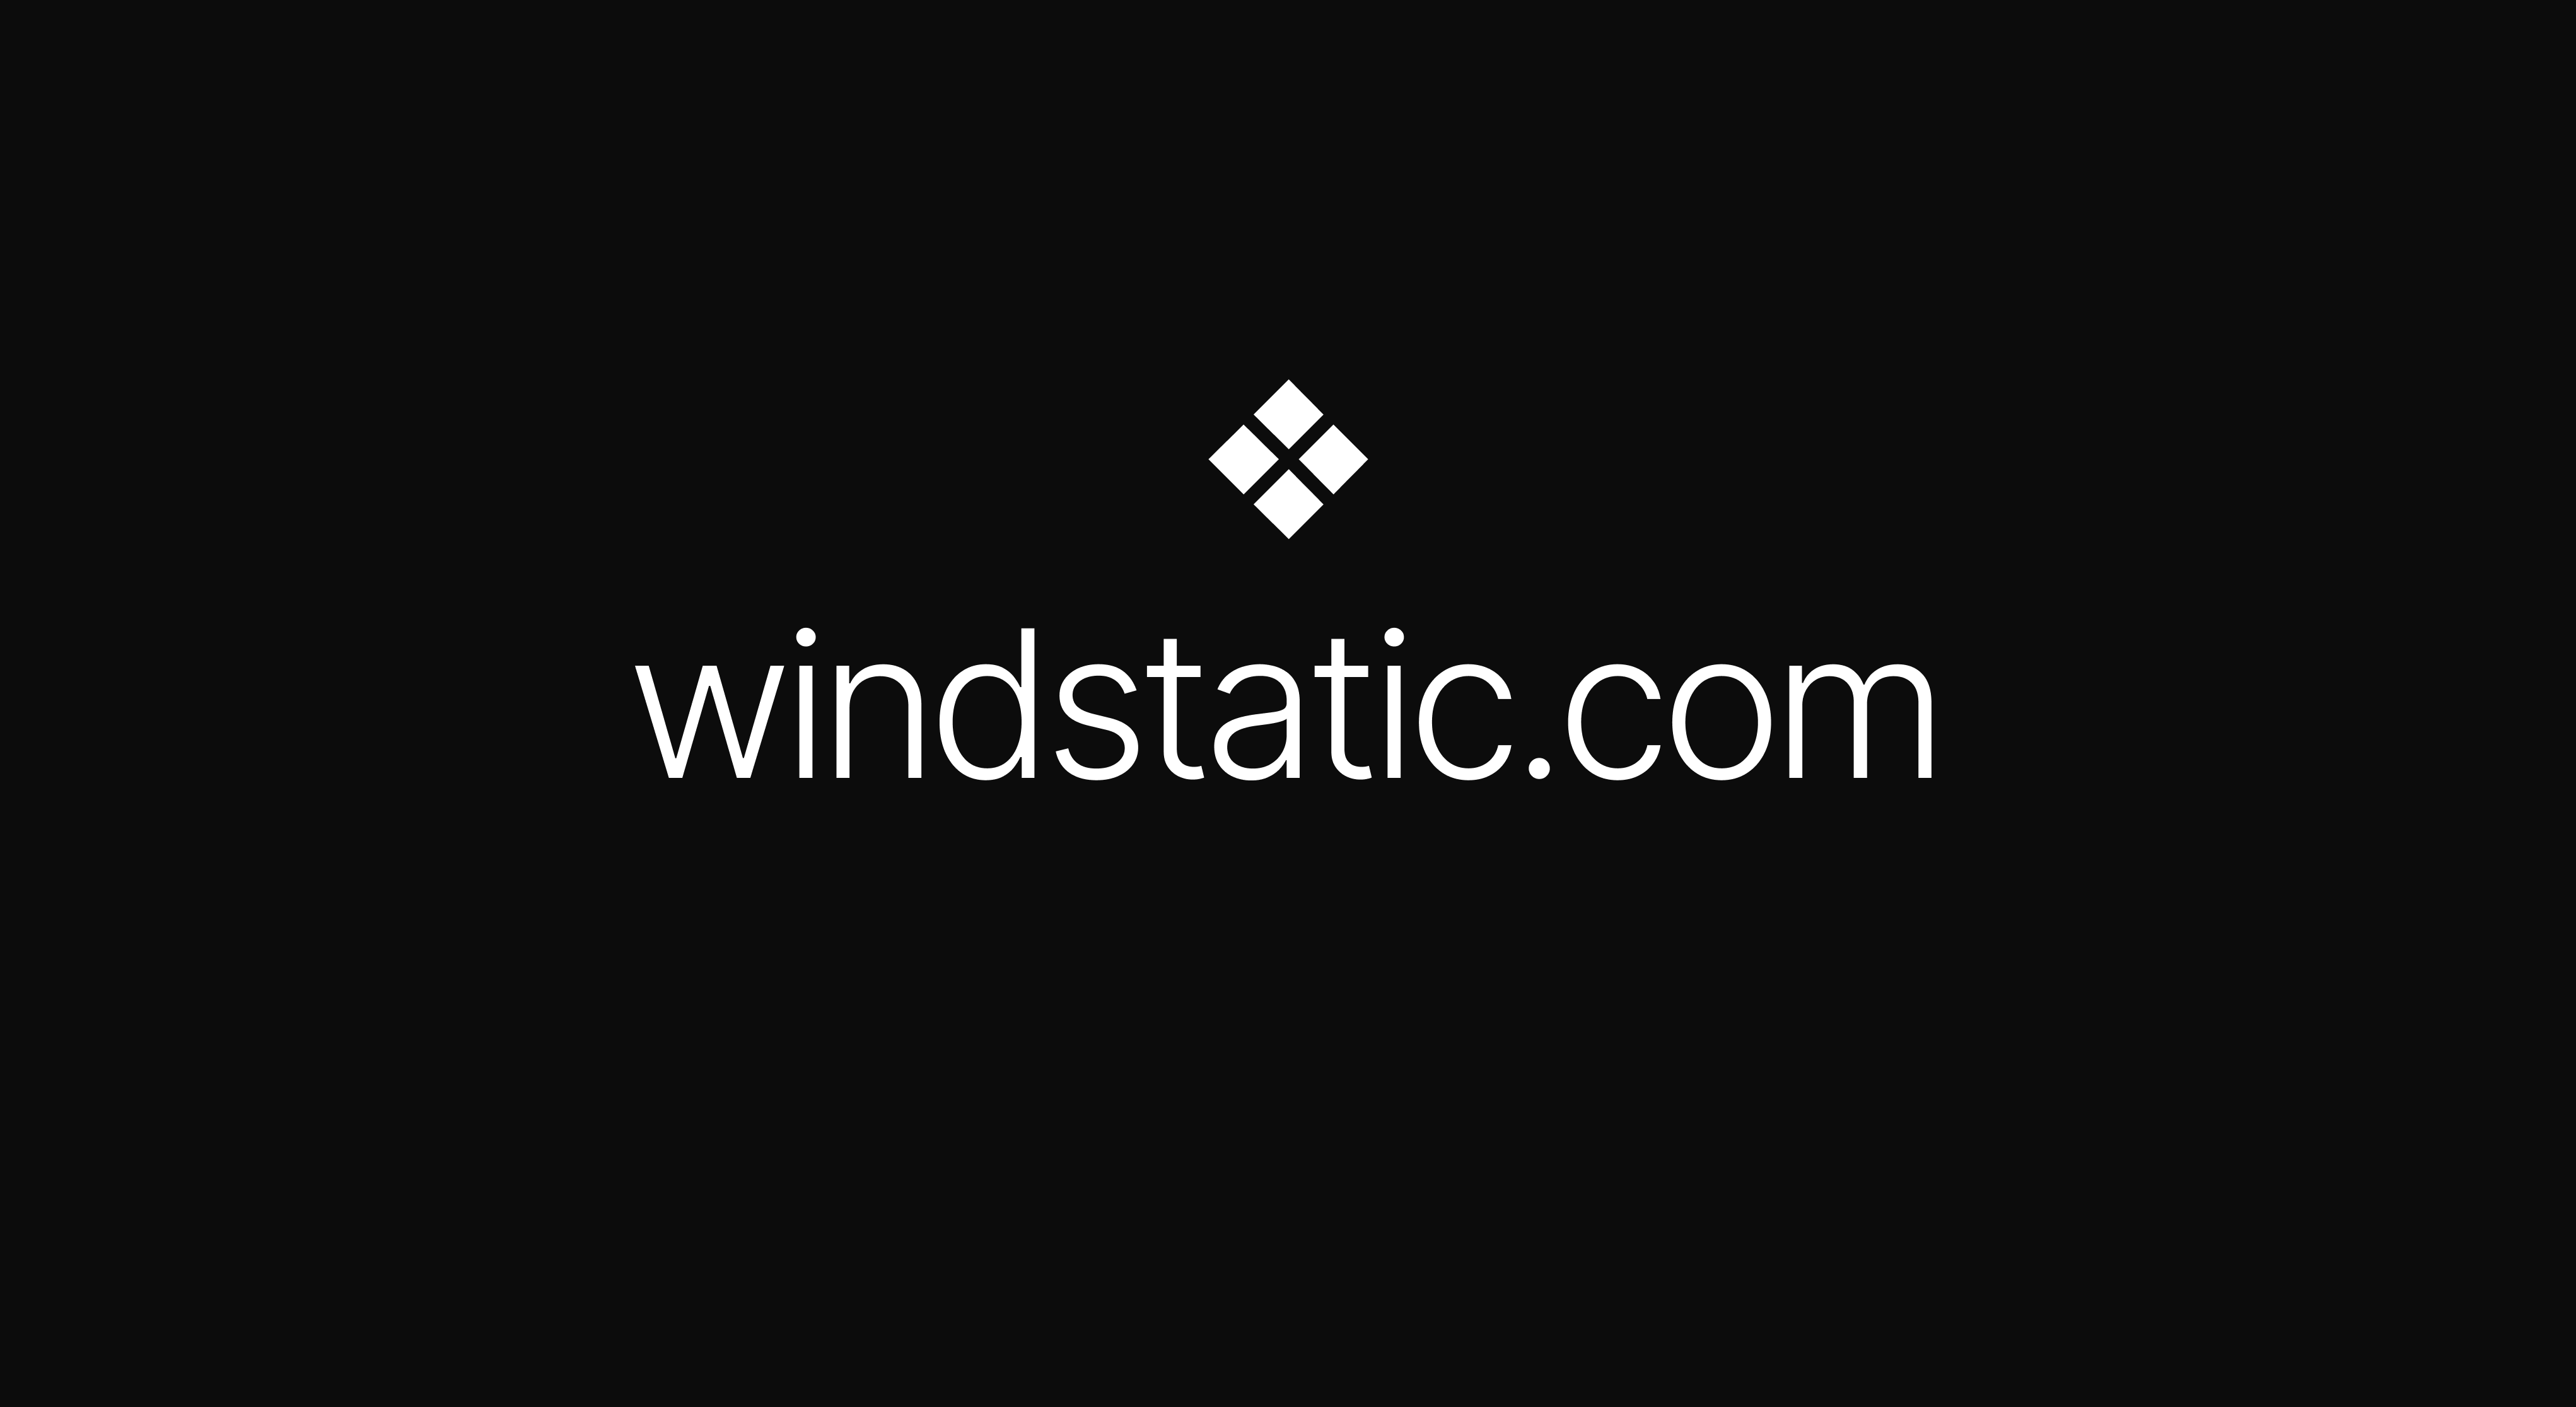 Windstatic